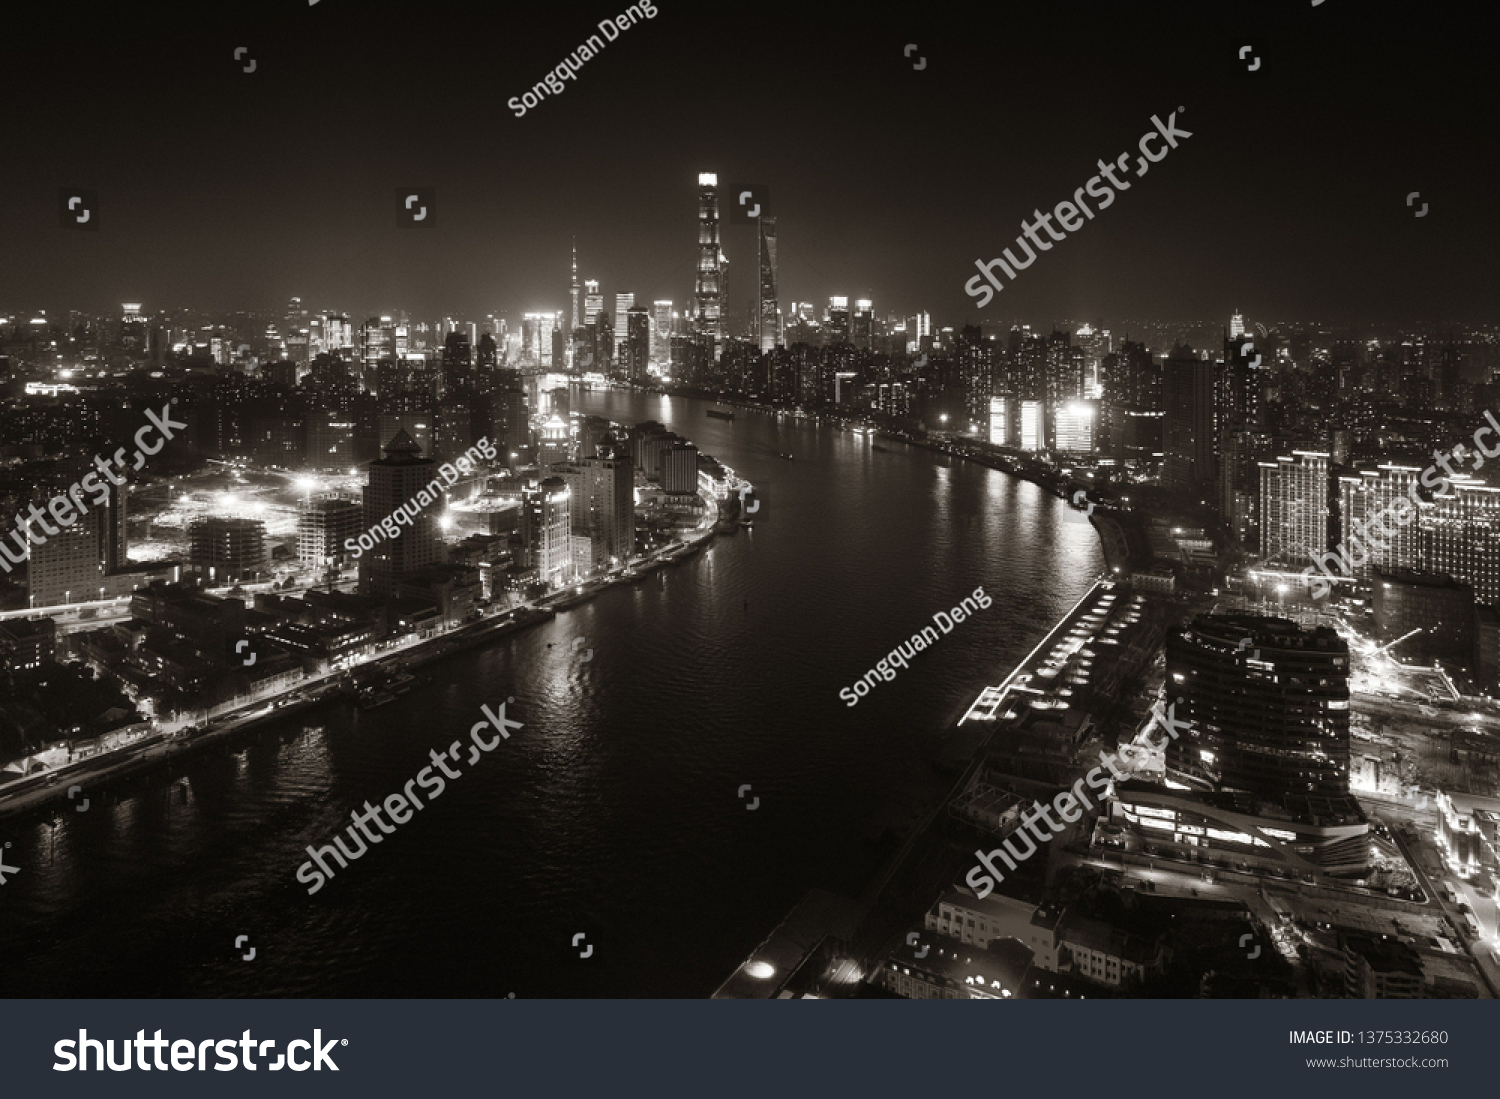 Shanghai Huangpu River night view with city skyline in China. #1375332680